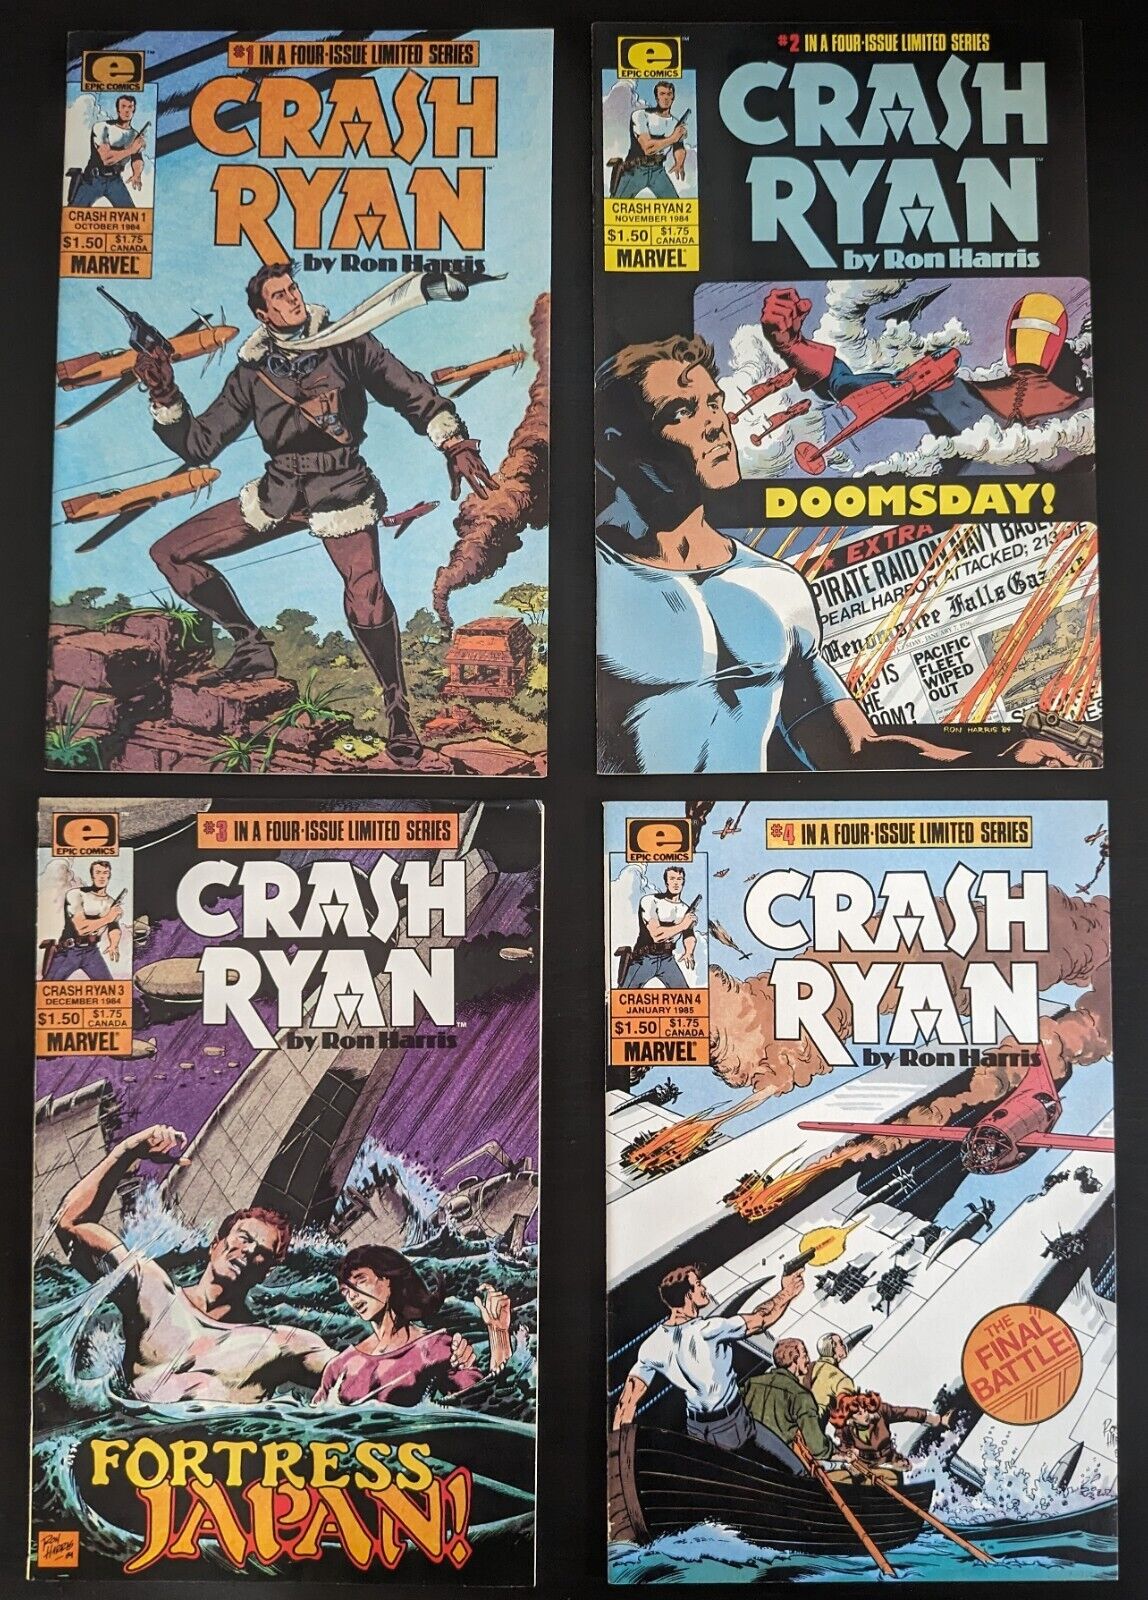 Crash Ryan #1-4 COMPLETE FULL SERIES RUN - 1984-85 Marvel Epic Comics - 4 Issues